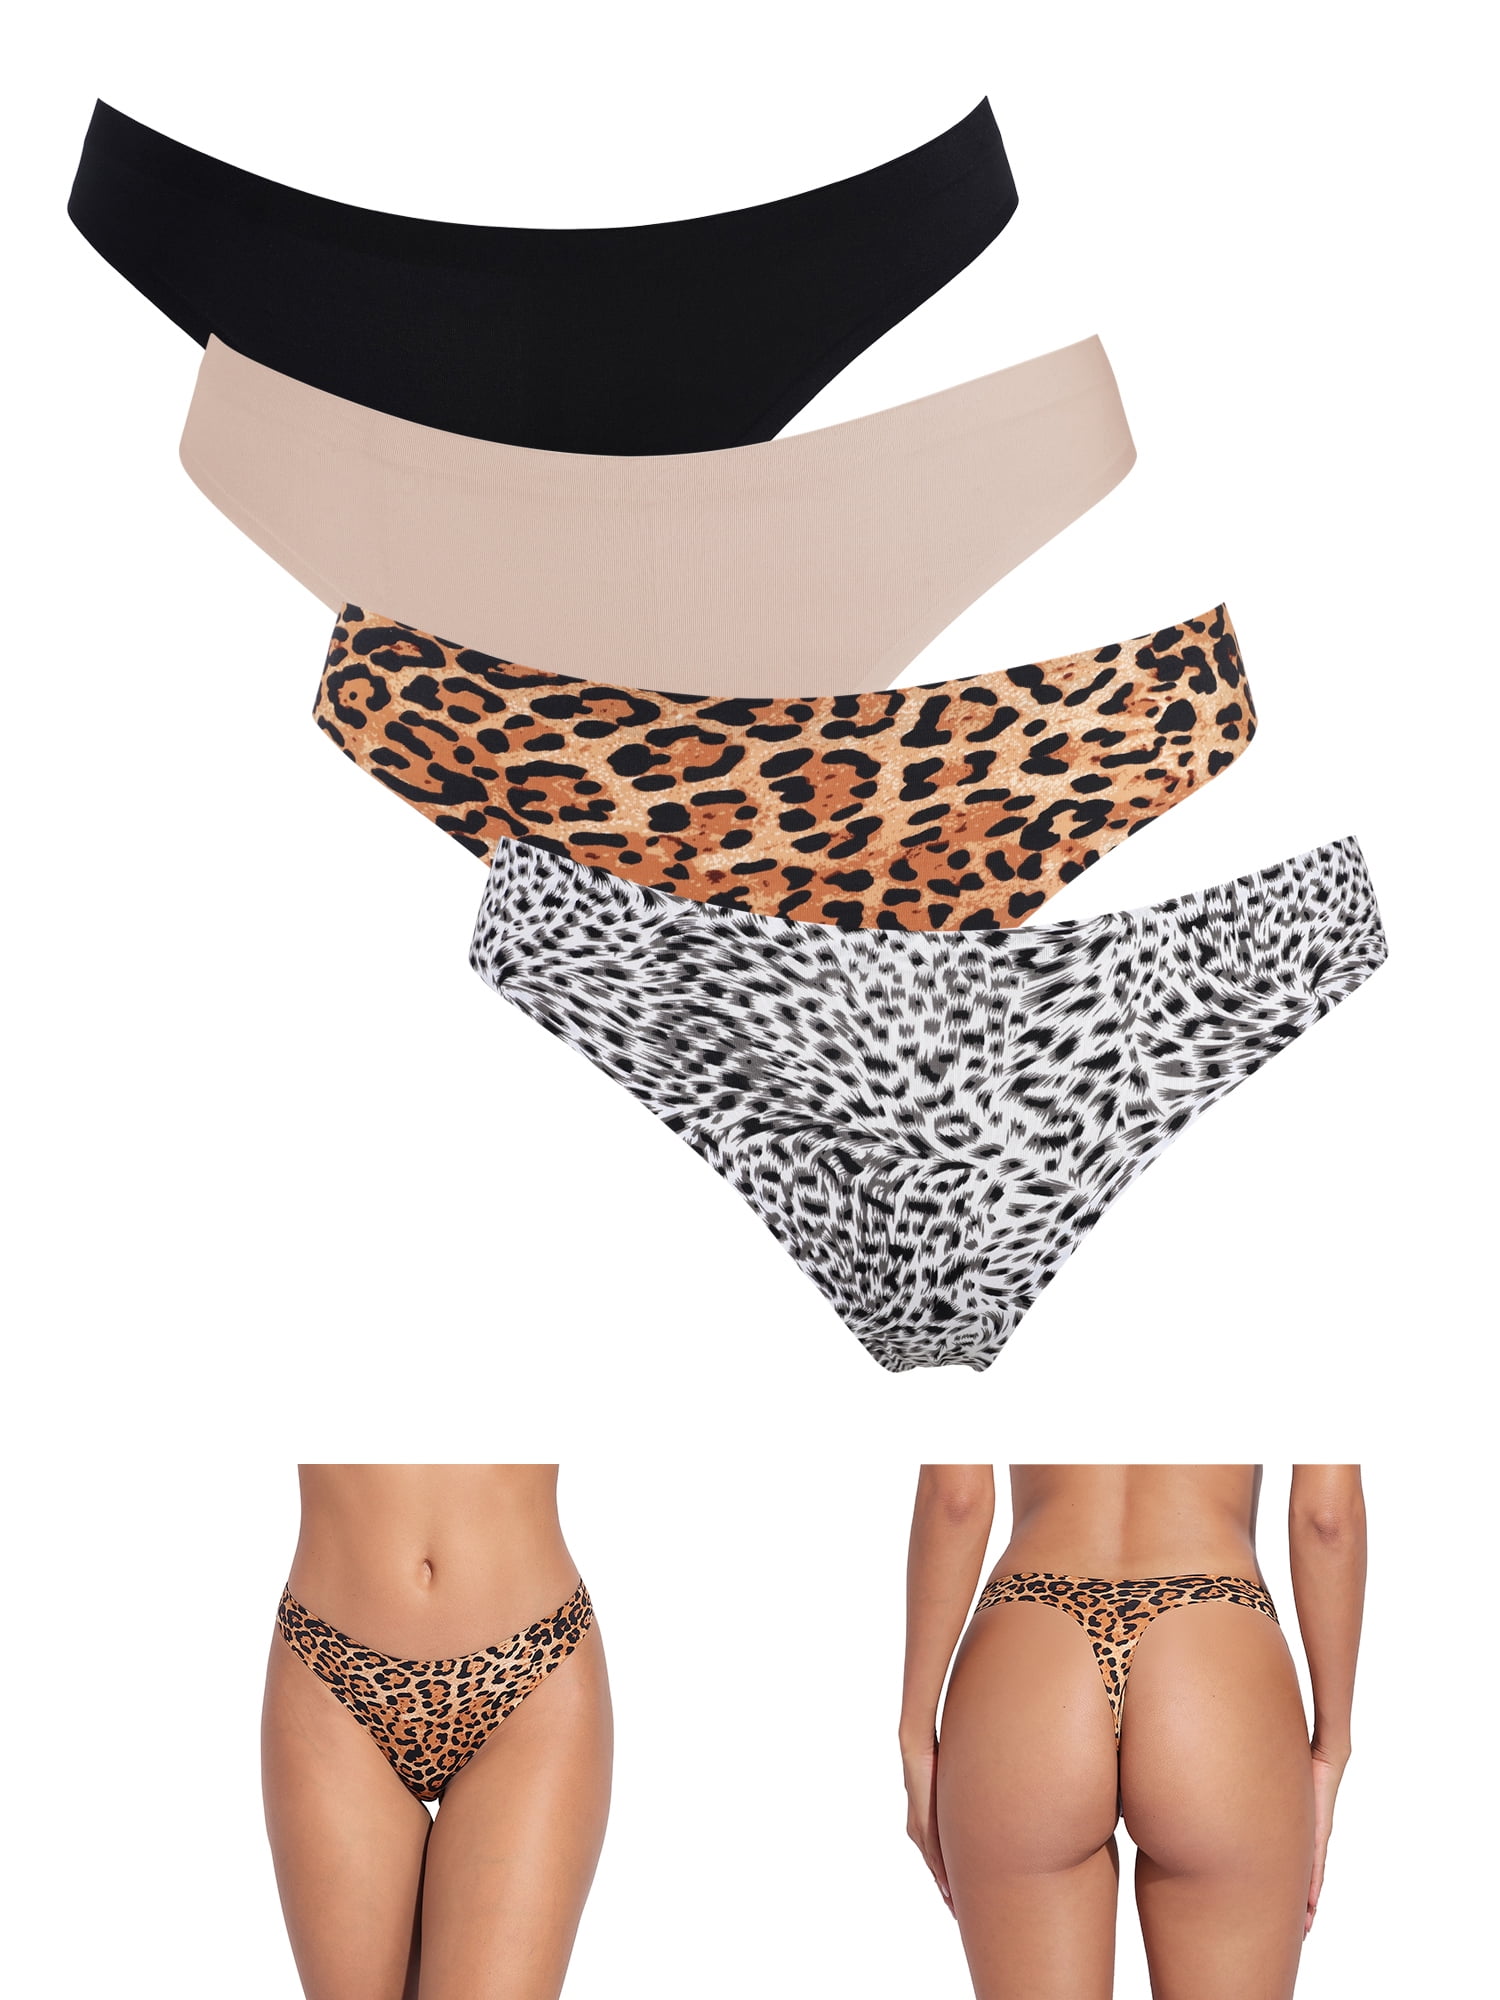 BeautyIn Women's Leopard Tanga Panties Nylon Thong Underwear